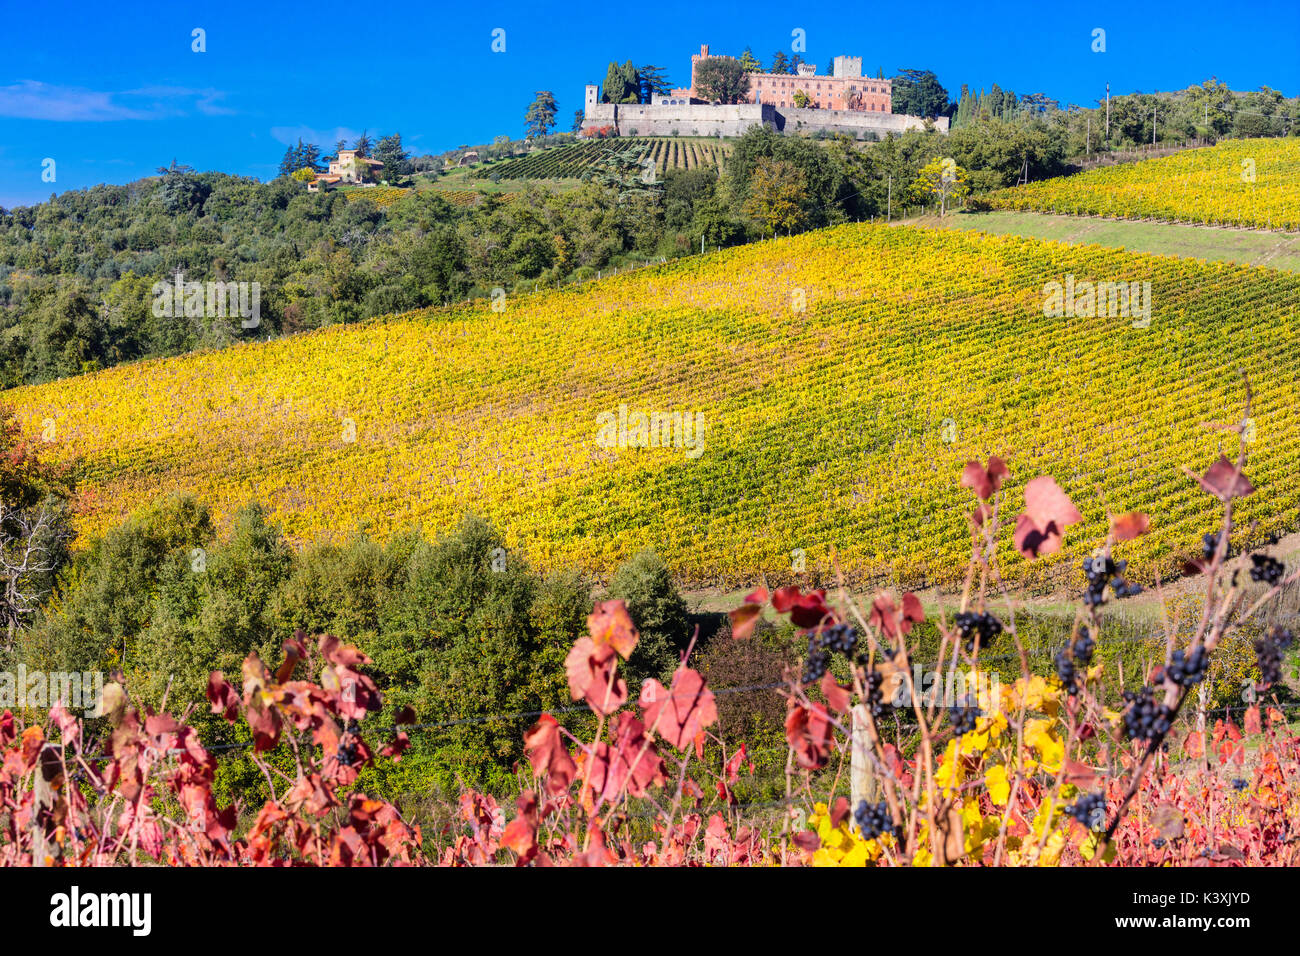 Scenic countryside and landscape of Tuscany - golden autumn vineyards. Castello di Brolio. Italy Stock Photo